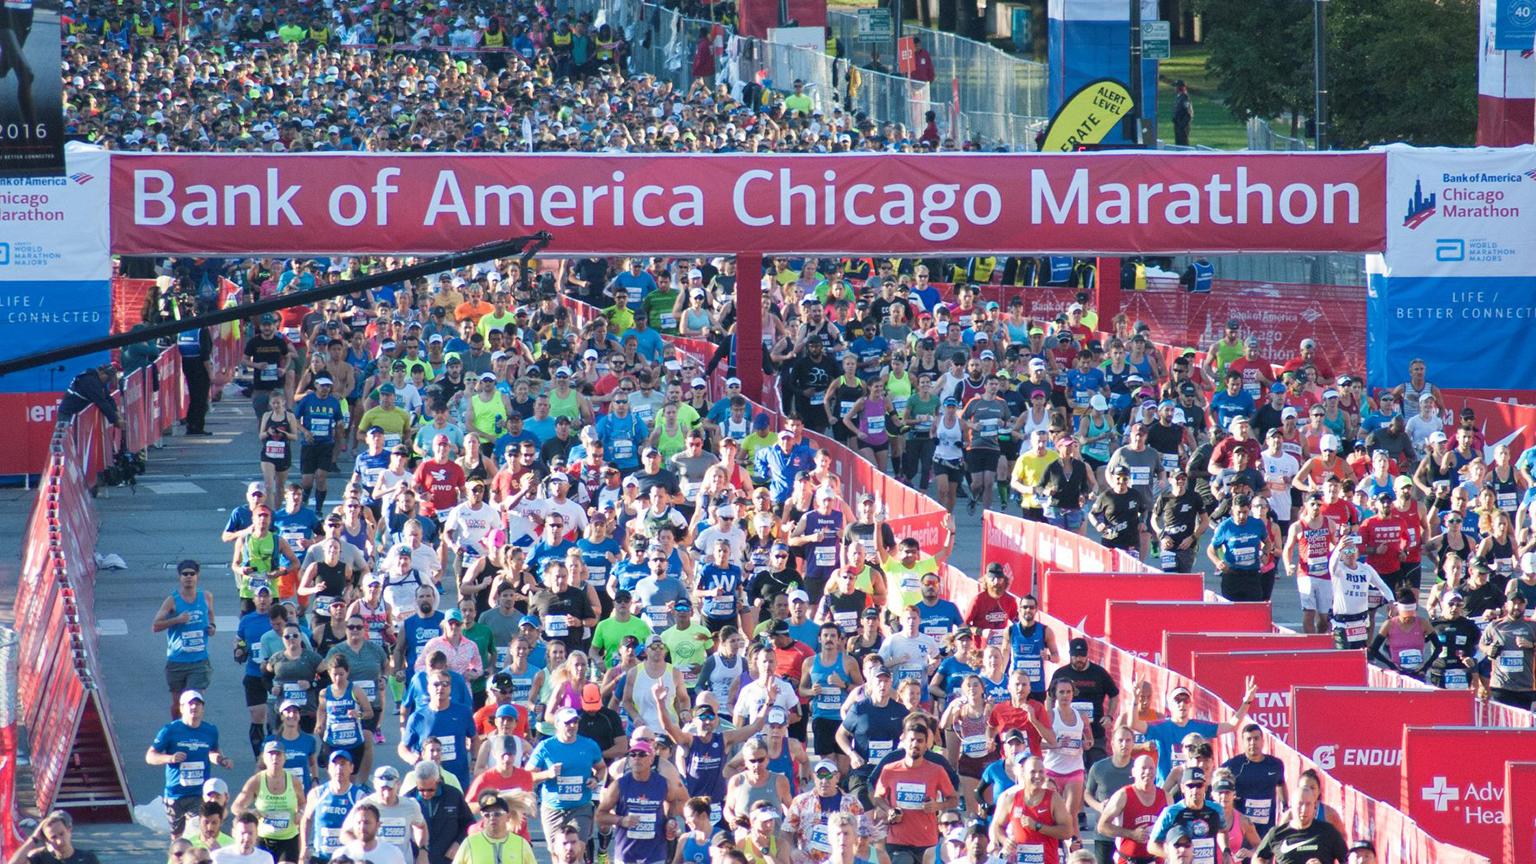 (Bank of America Chicago Marathon / Facebook)